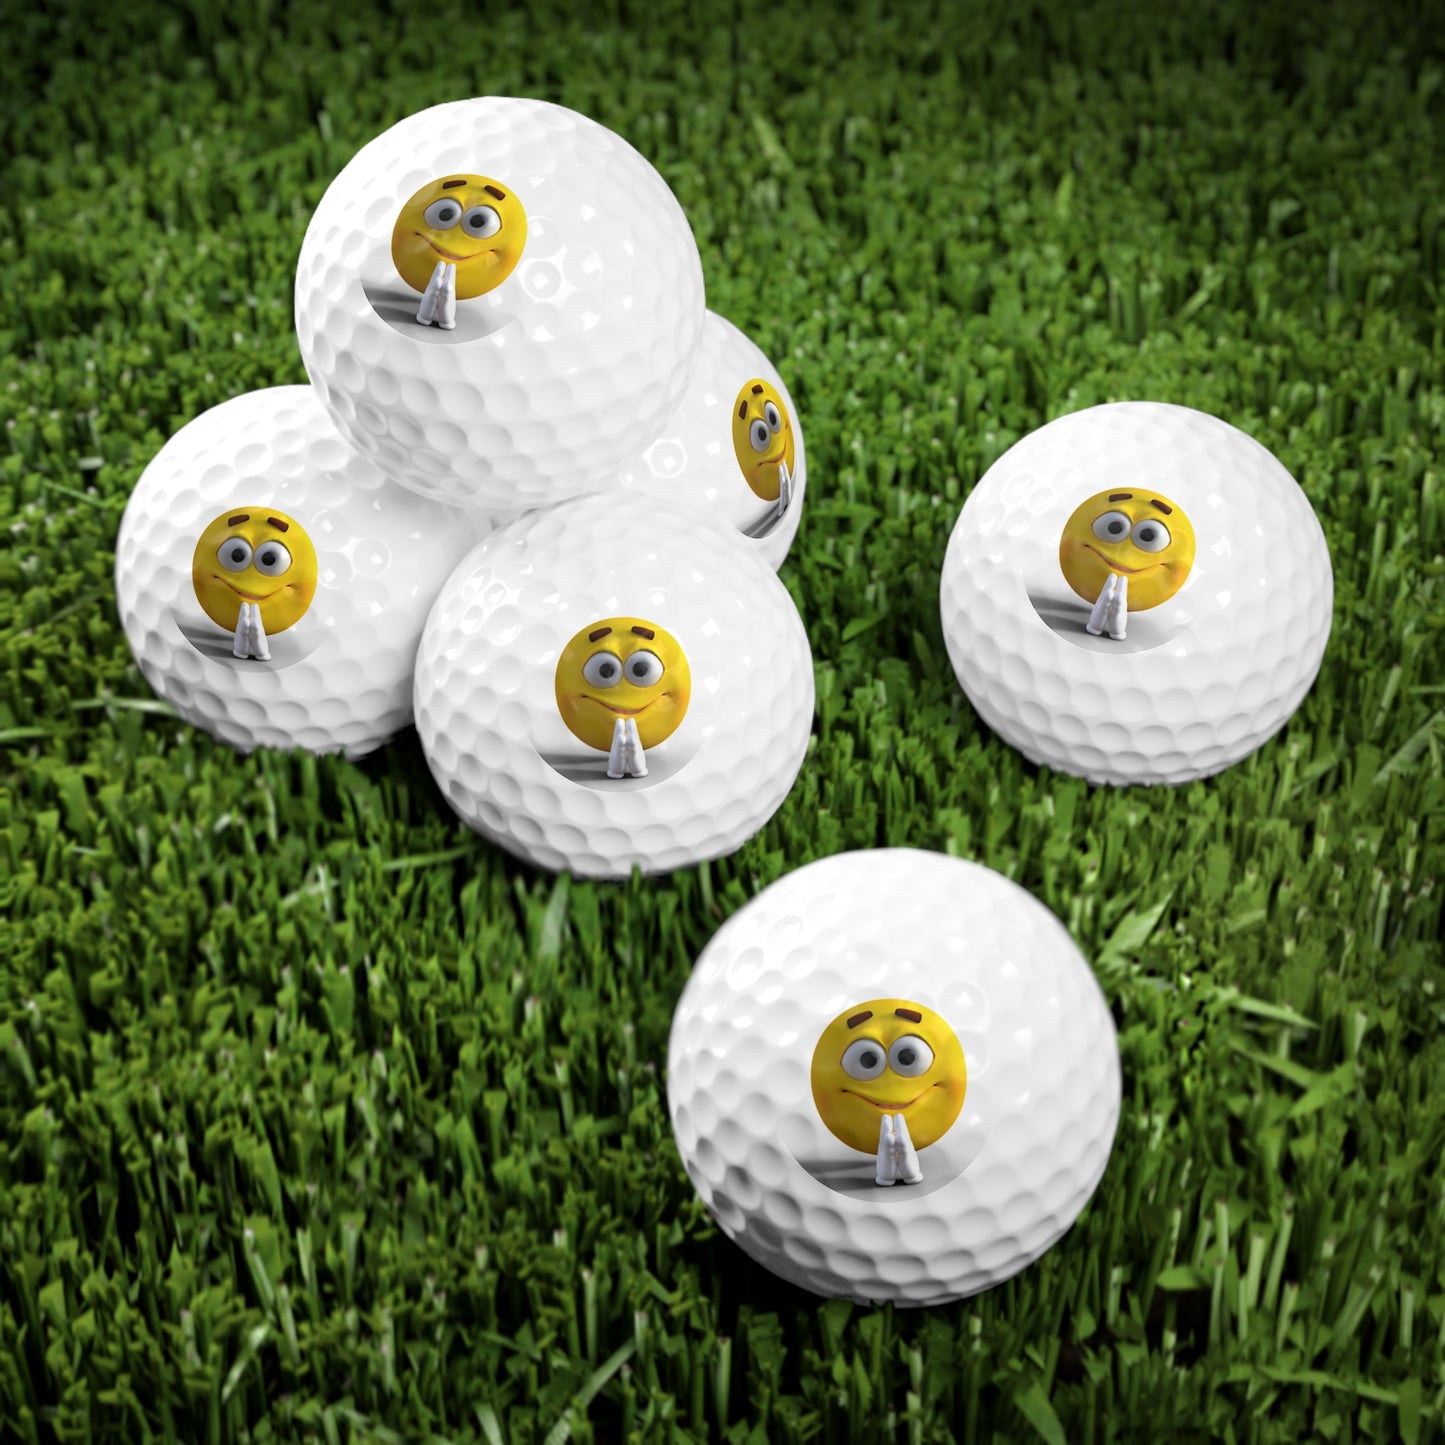 Emoticon Golf Balls (2), 6pcs